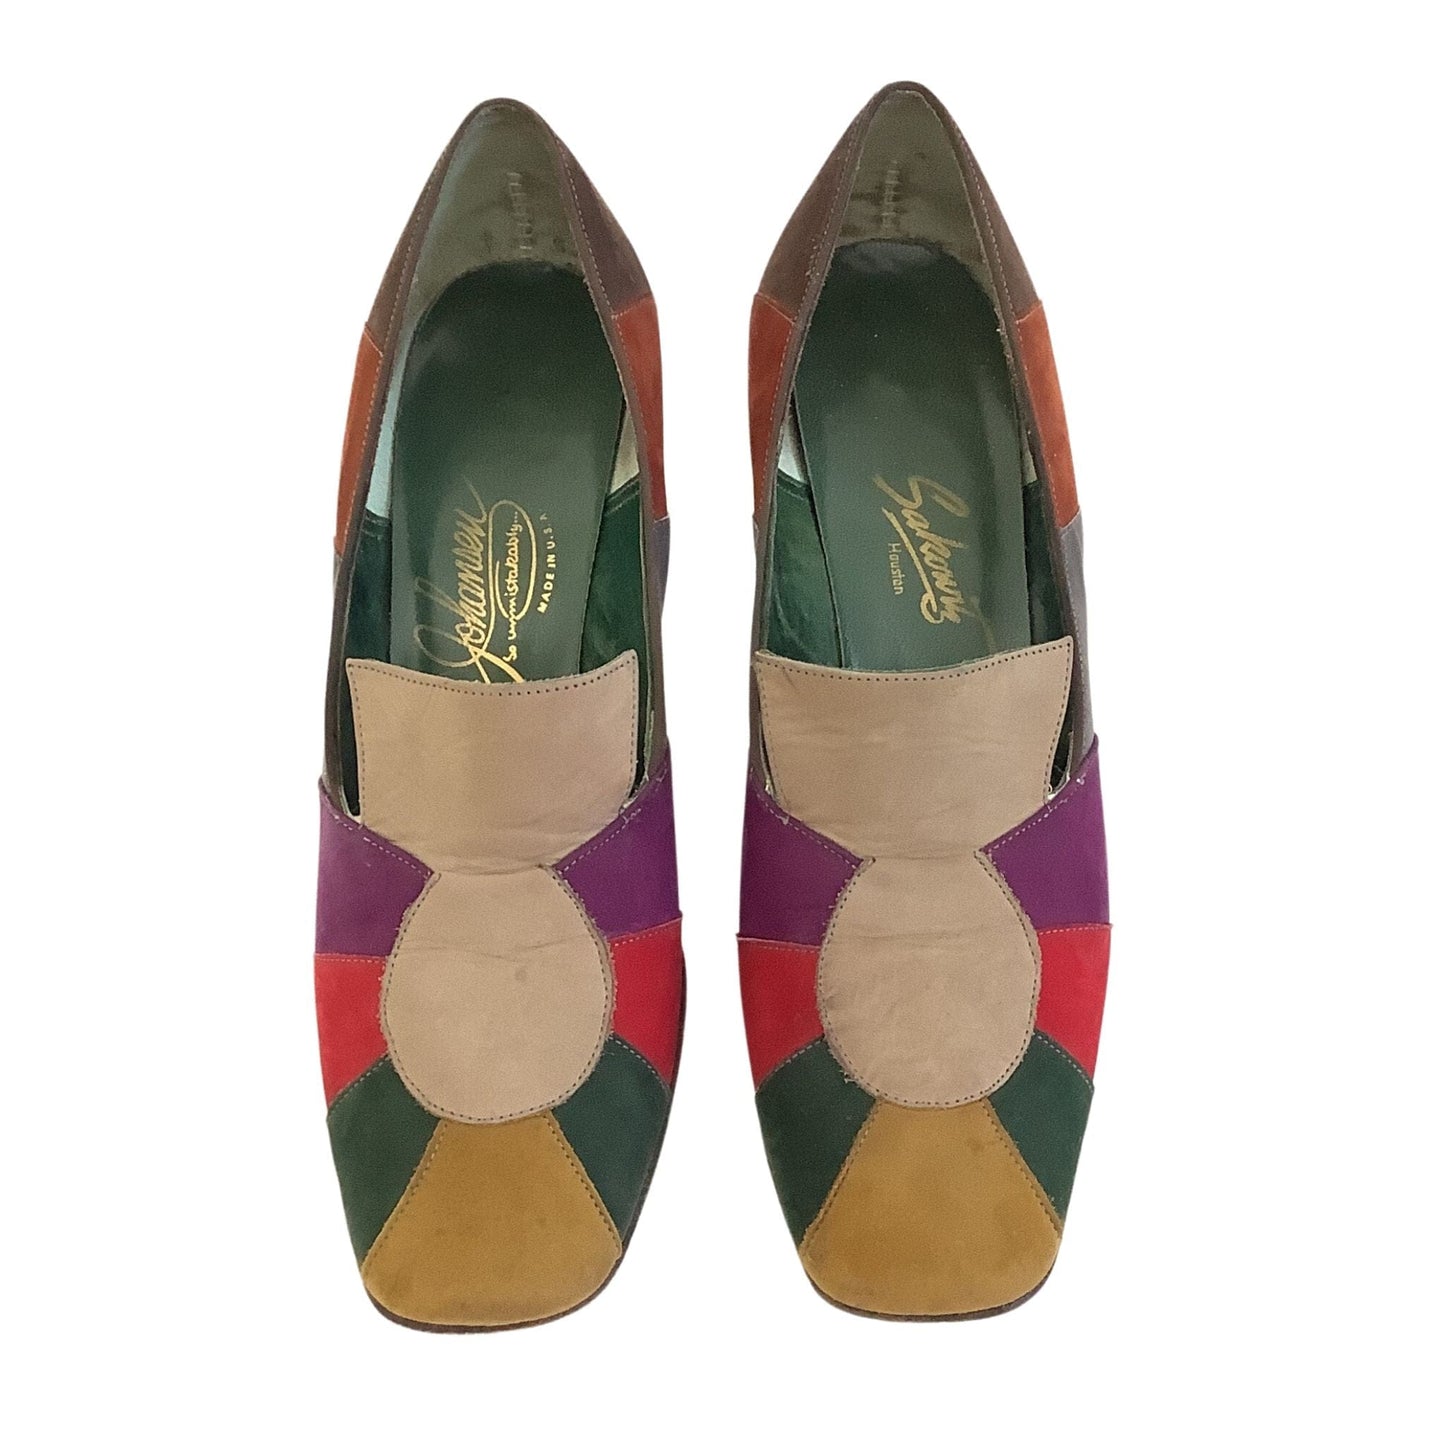 Vintage Color Block Heels 7 / Multi / Vintage 1960s